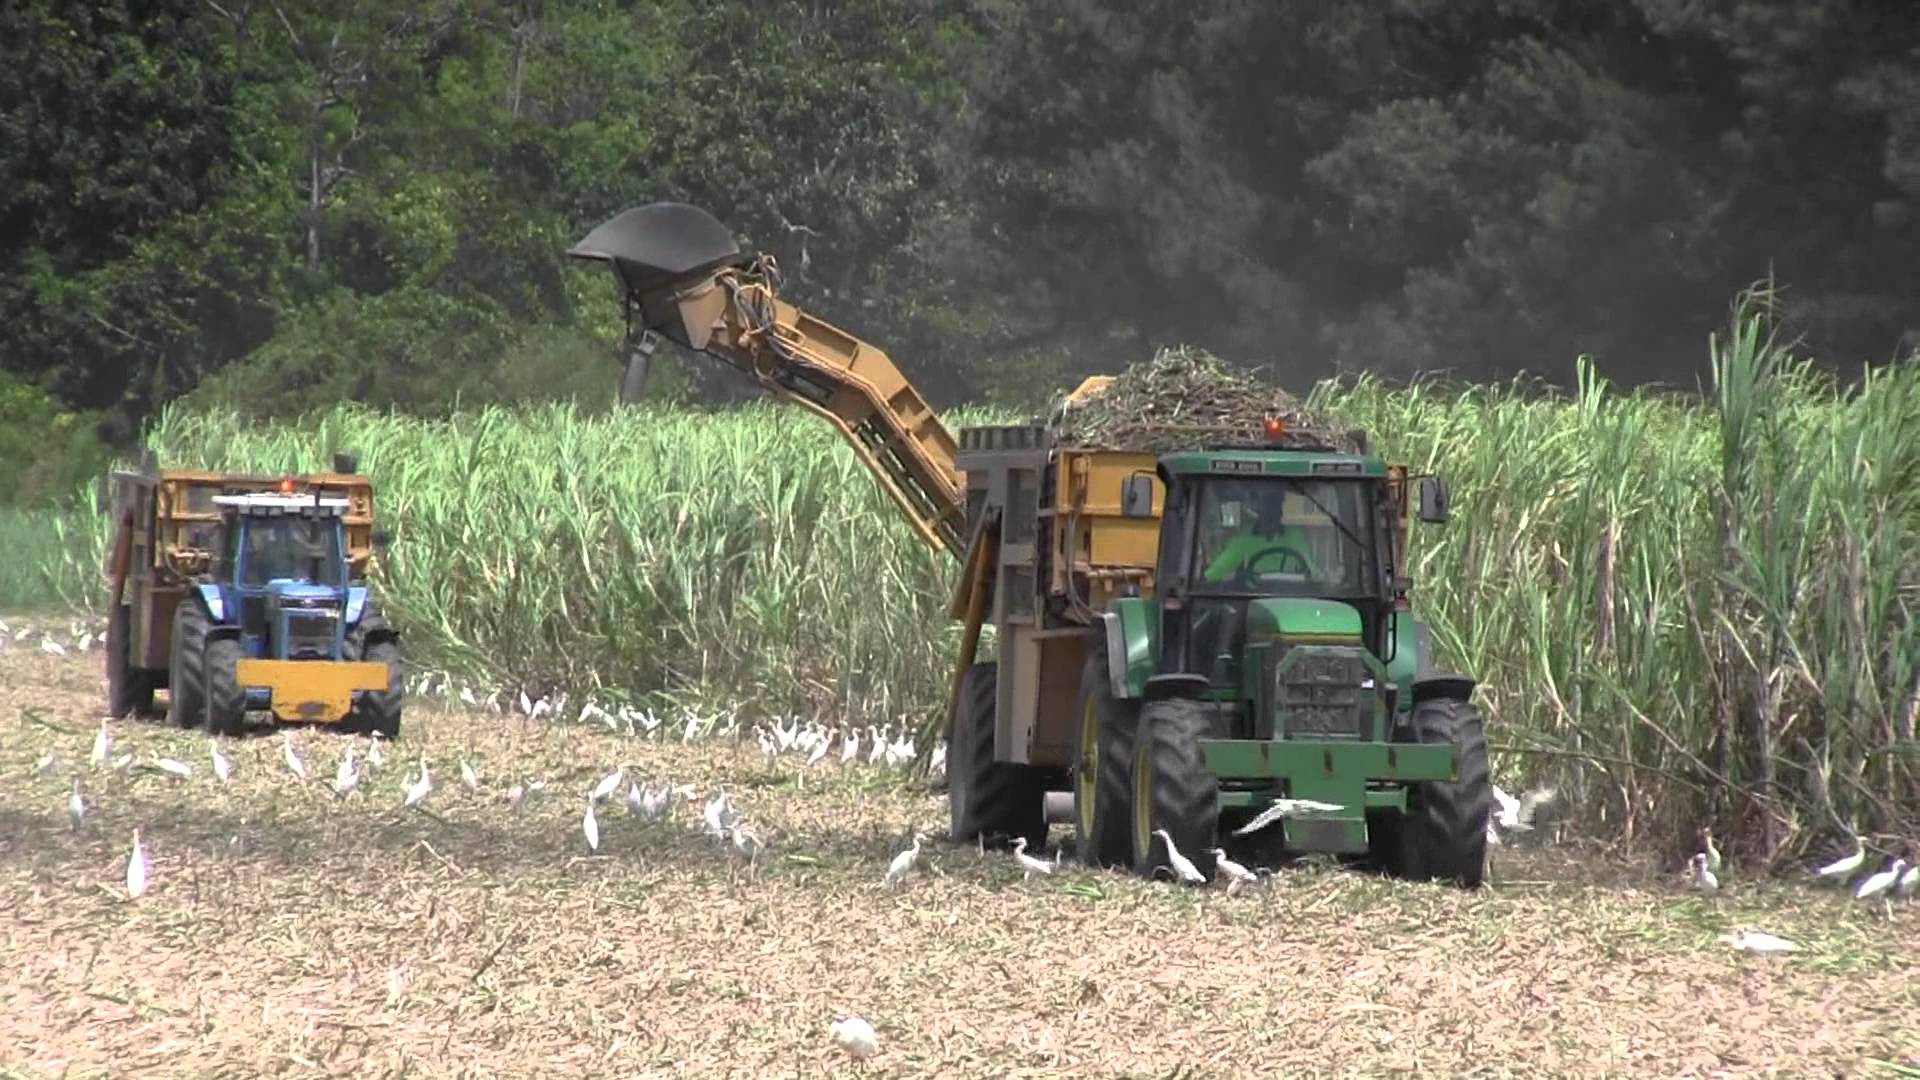 sugar cane harvester in australia - YouTube